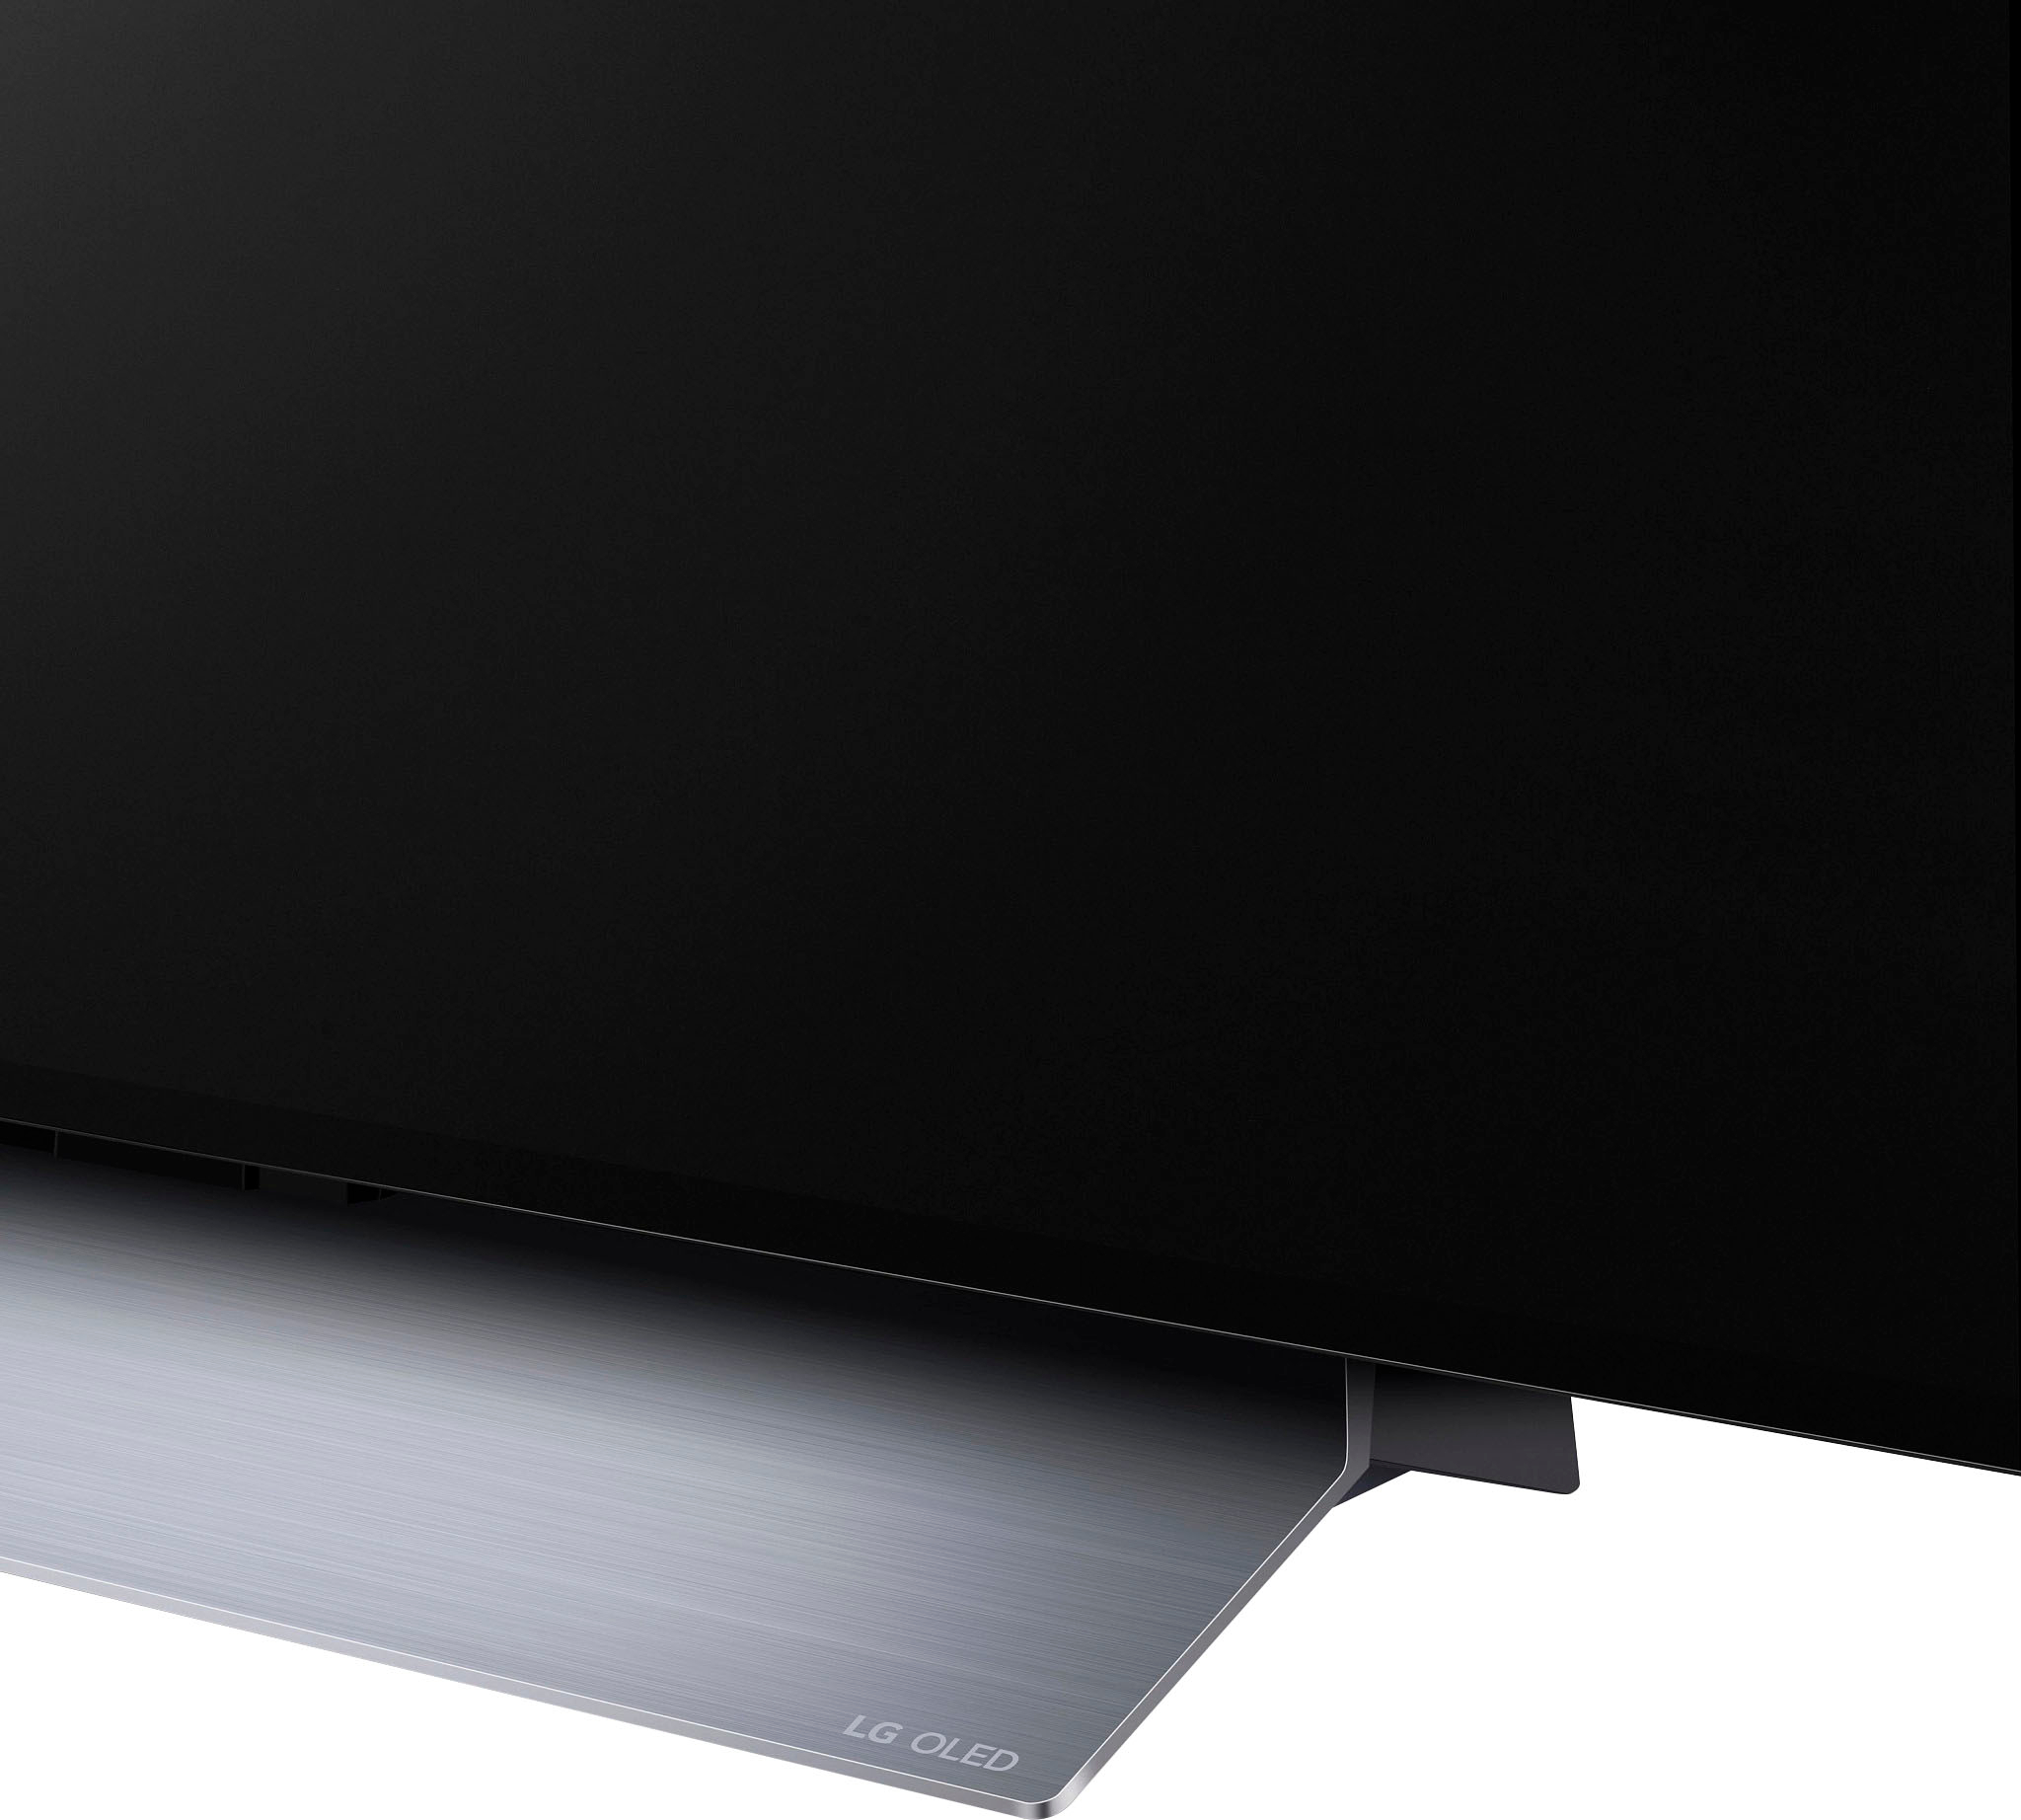 Best Buy: LG 55 Class C2 Series OLED evo 4K UHD Smart webOS TV OLED55C2PUA